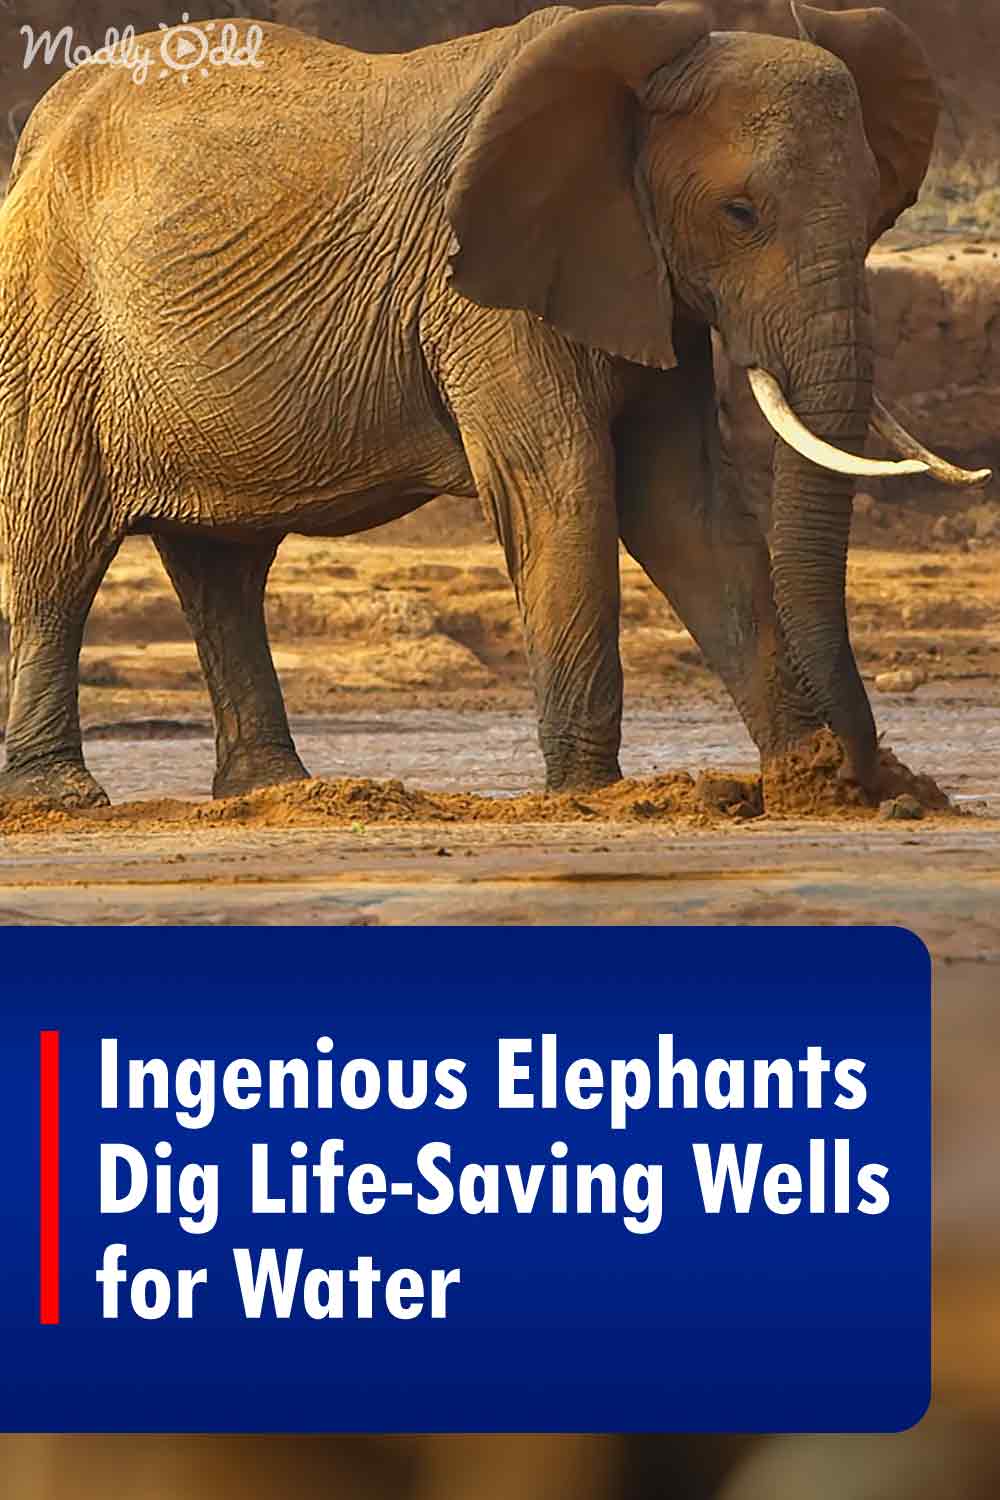 Ingenious Elephants Dig Life-Saving Wells for Water